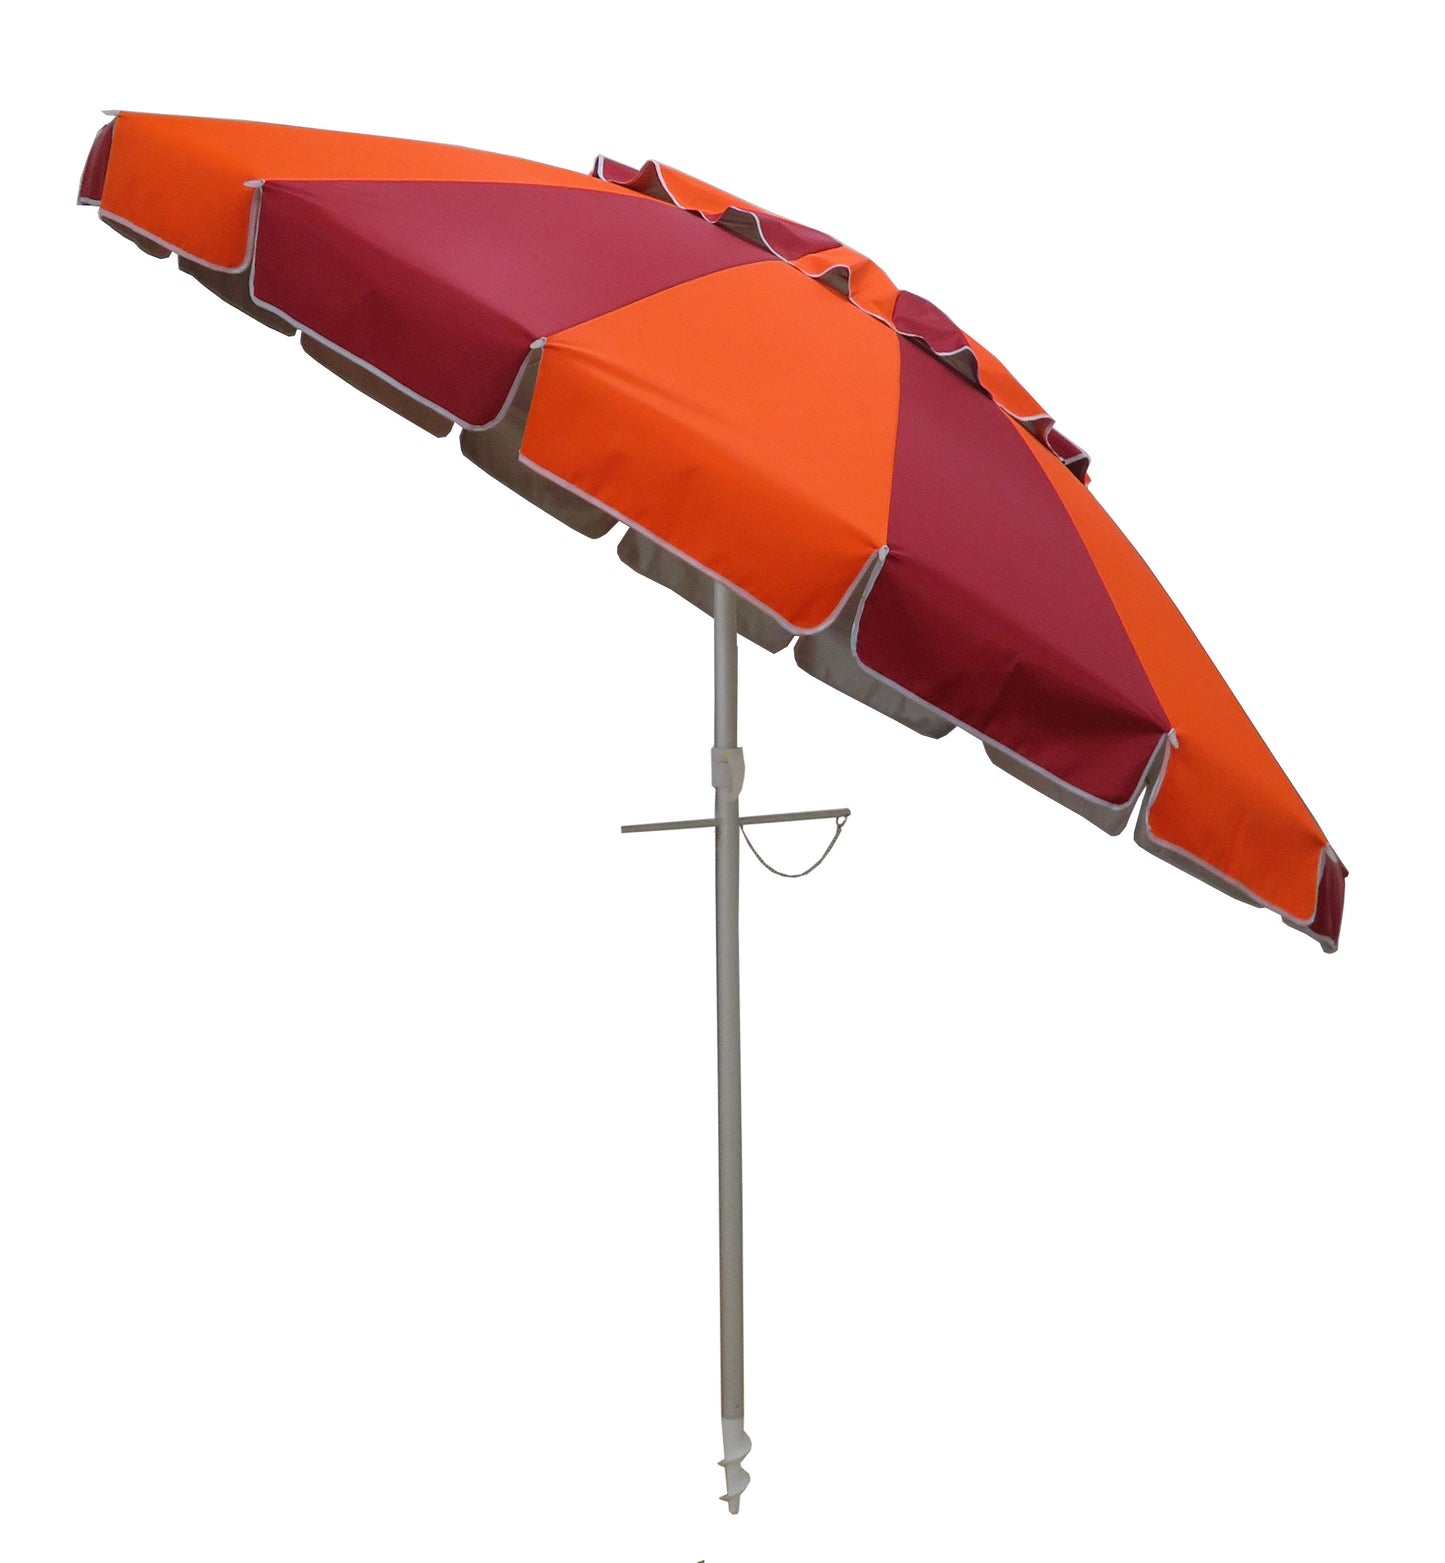 Carnivale 240cm Beach Umbrella - Orange & Red